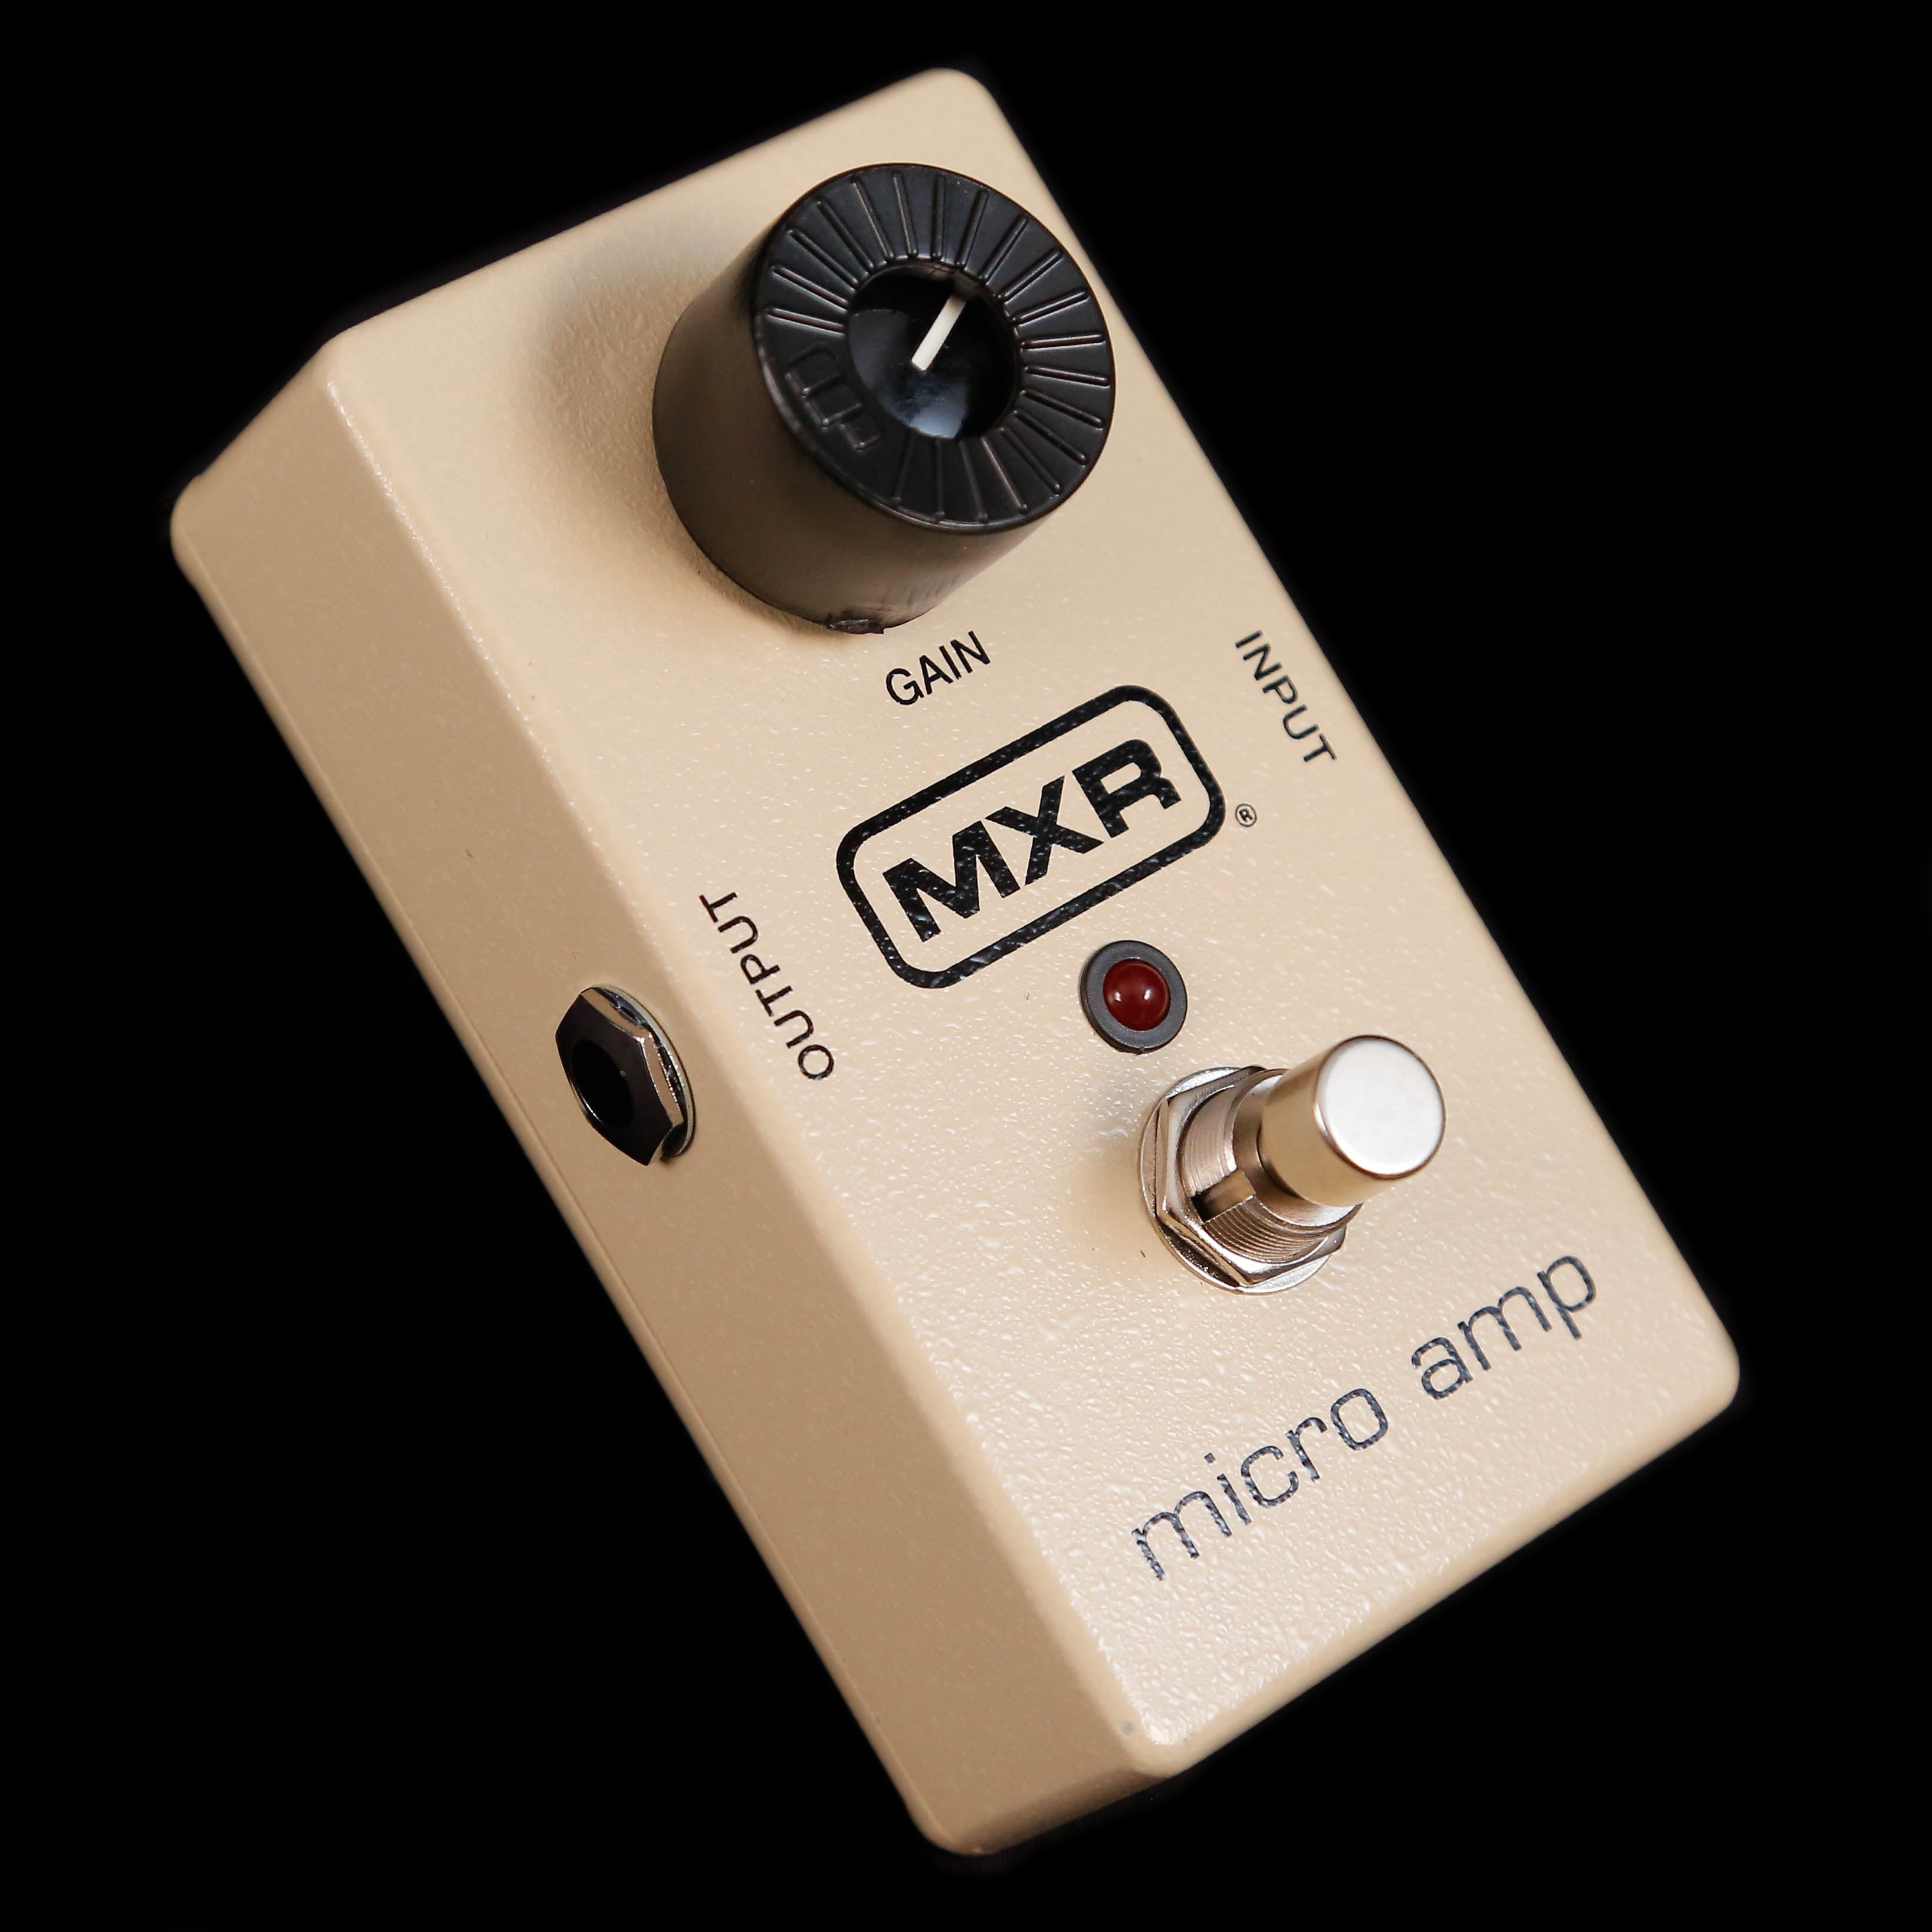 Dunlop M133 MXR Micro Amp – Melody Music Shop LLC